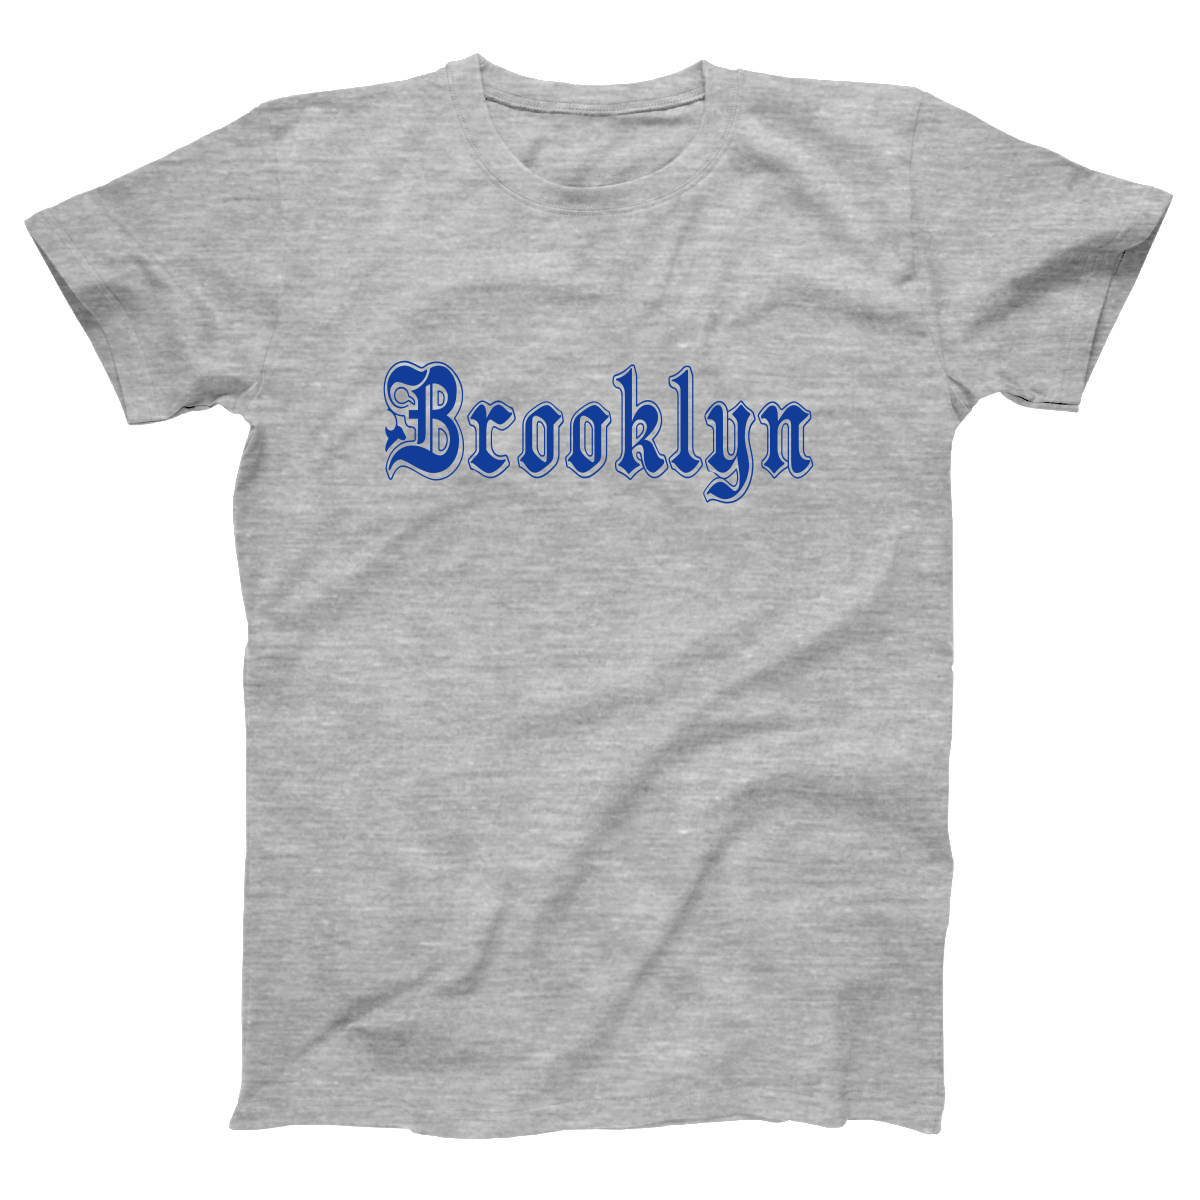 Brooklyn Gothic Represent Women's T-shirt | Gray